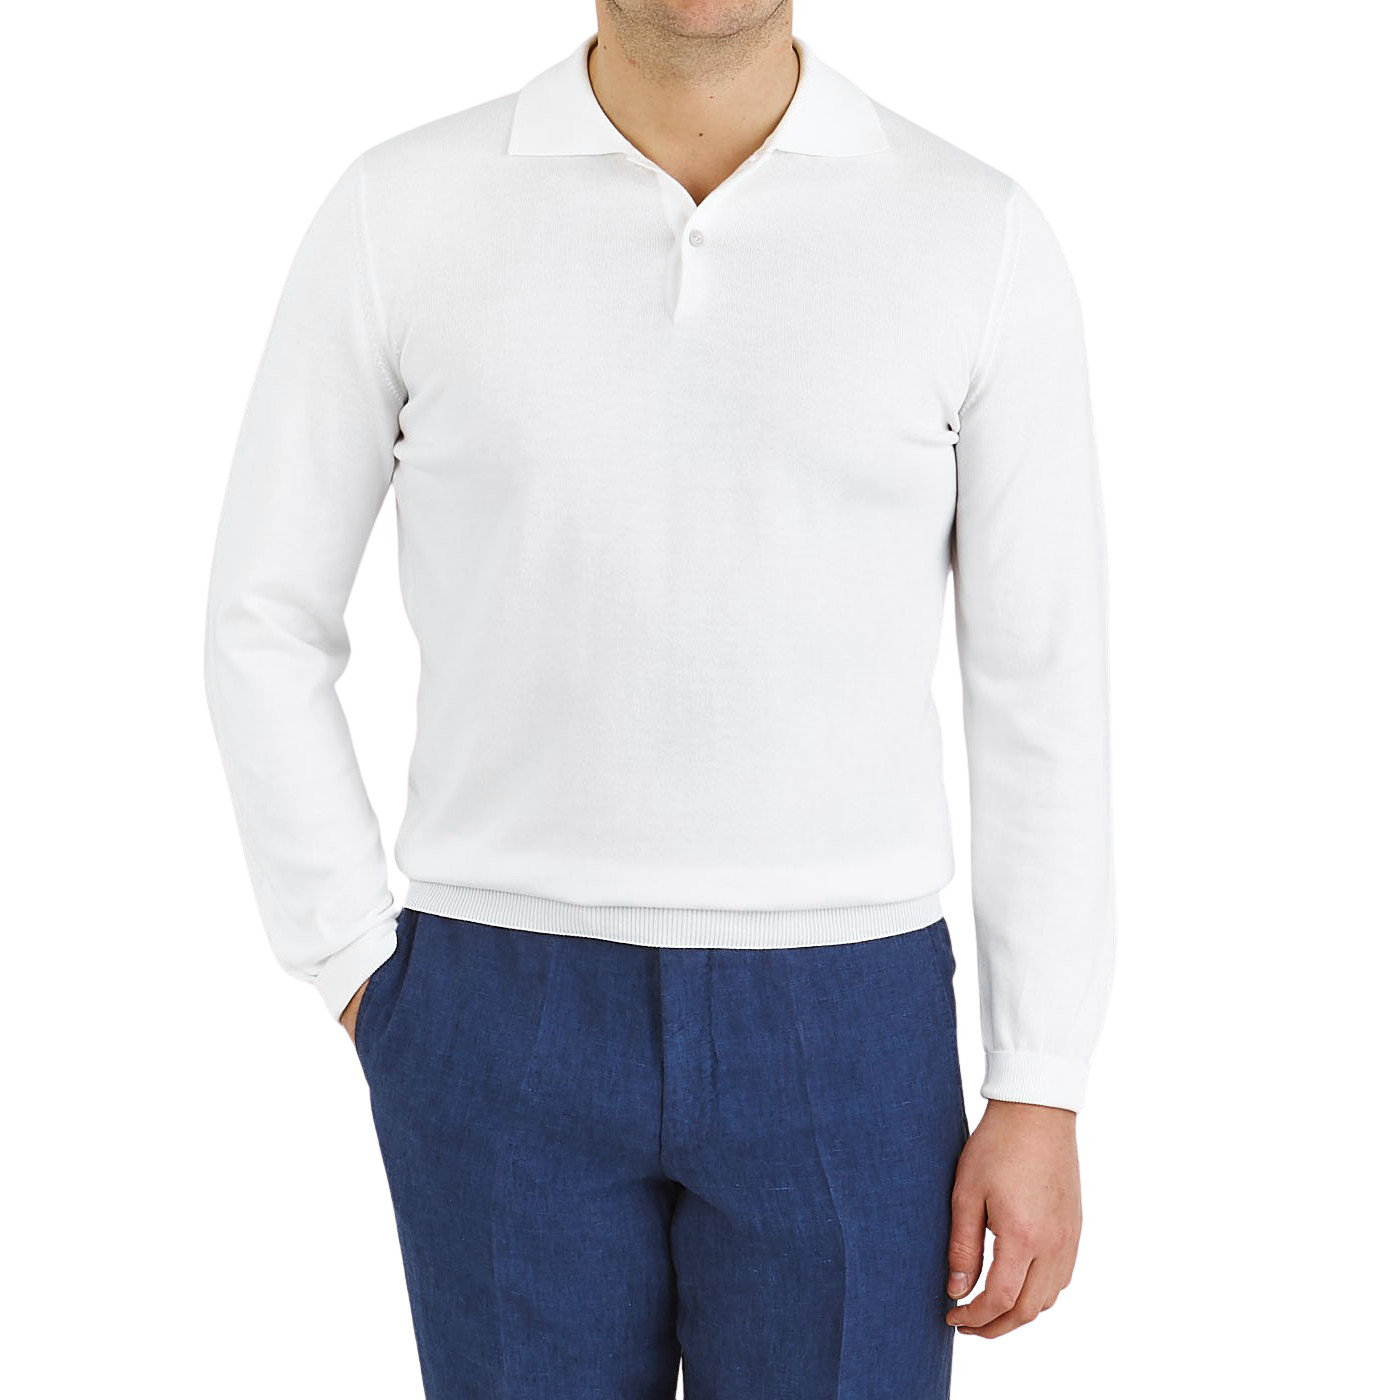 Mauro Ottaviani Clear White Cotton Long Sleeve Polo Shirt Front